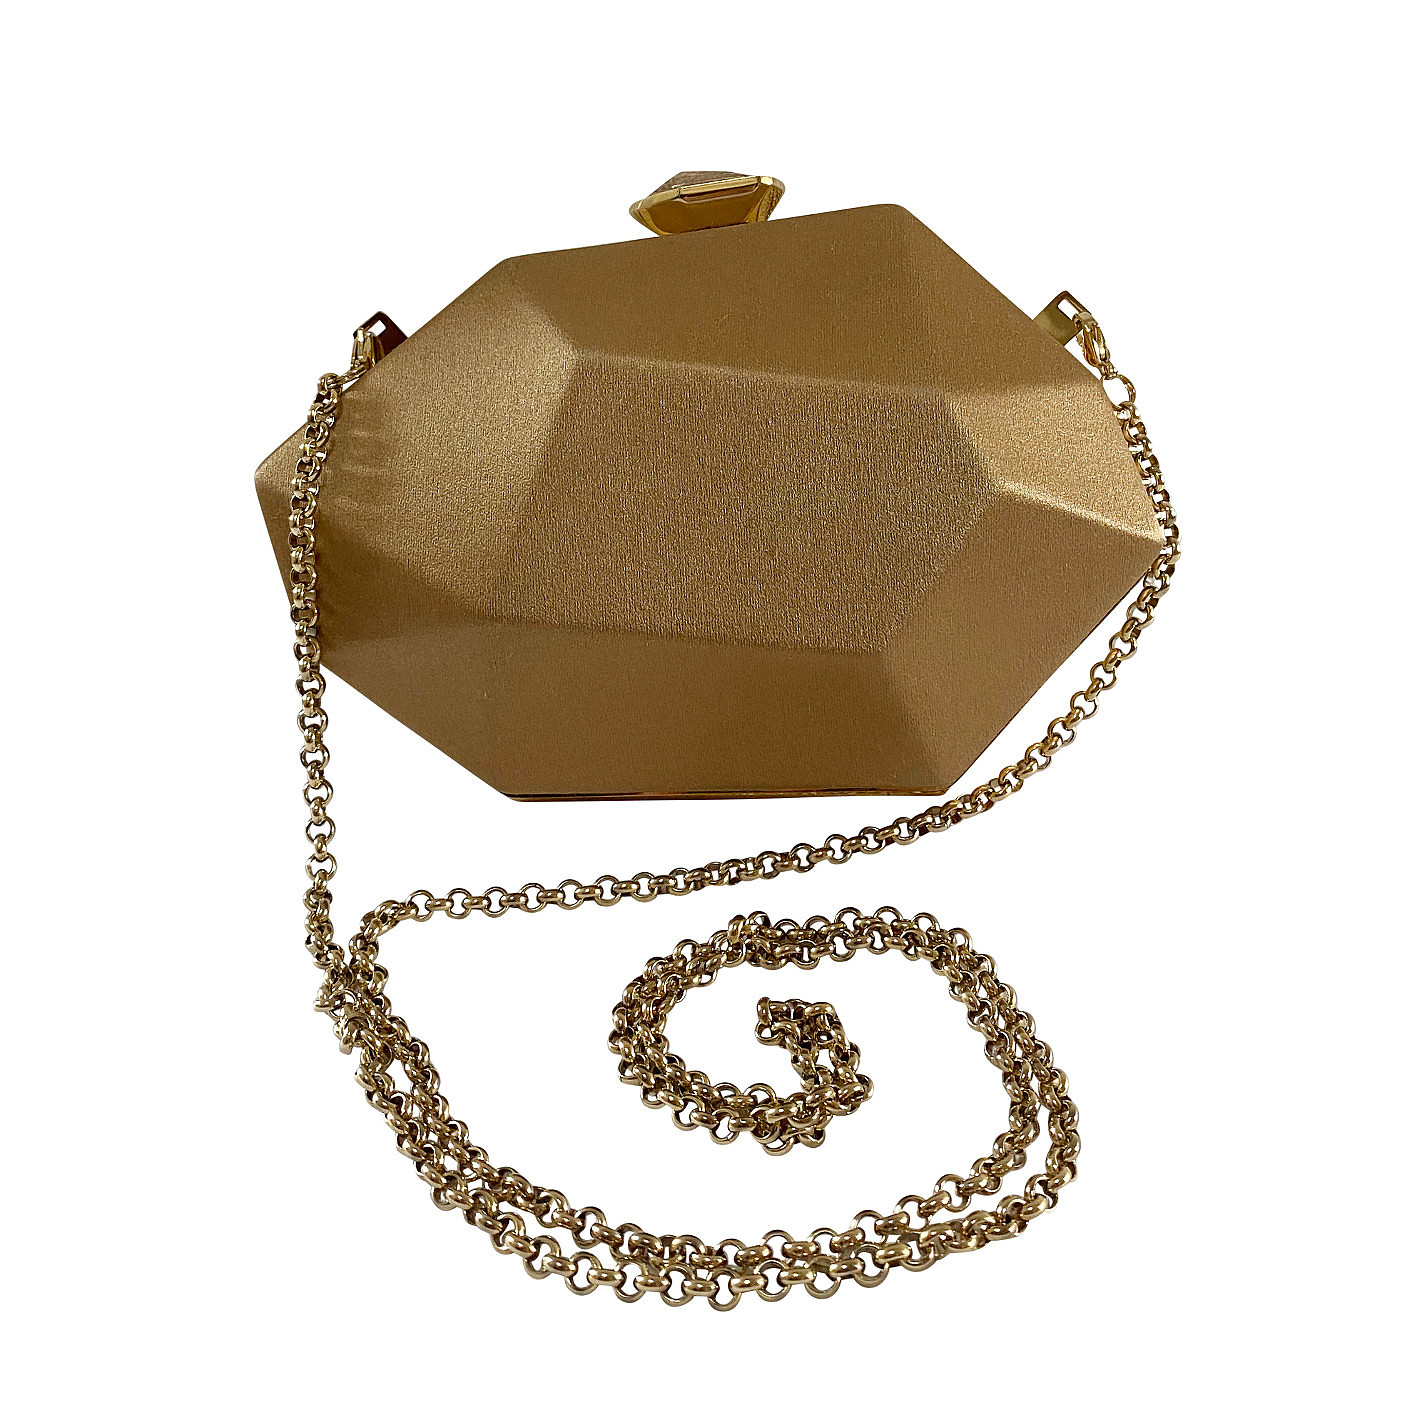 Atelier Swarovski Crystal geometric clutch with satin contrast and chain gold